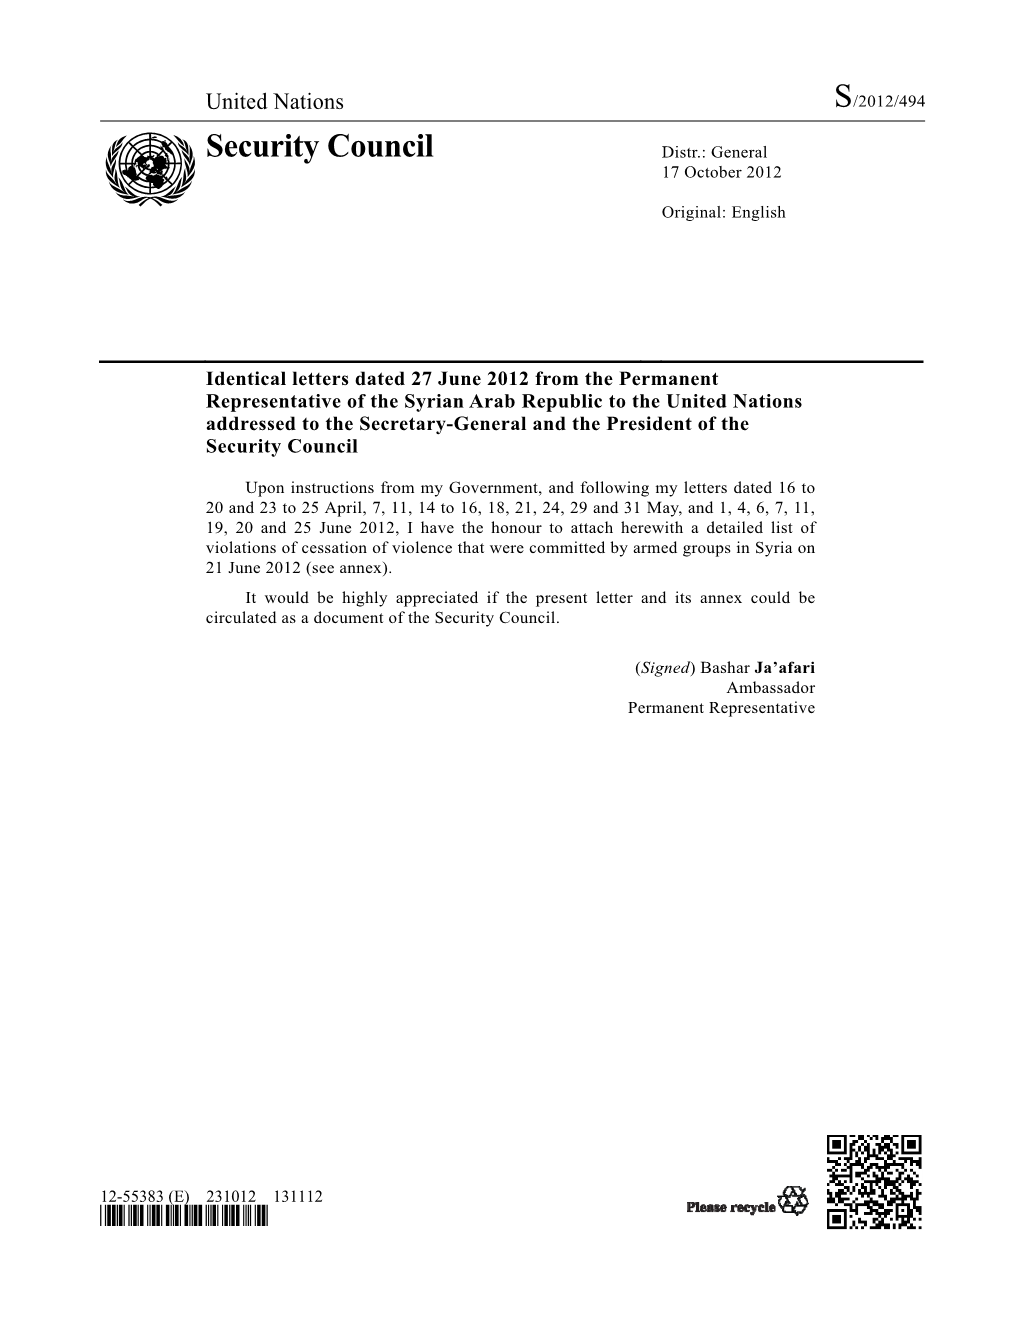 Security Council Distr.: General 17 October 2012